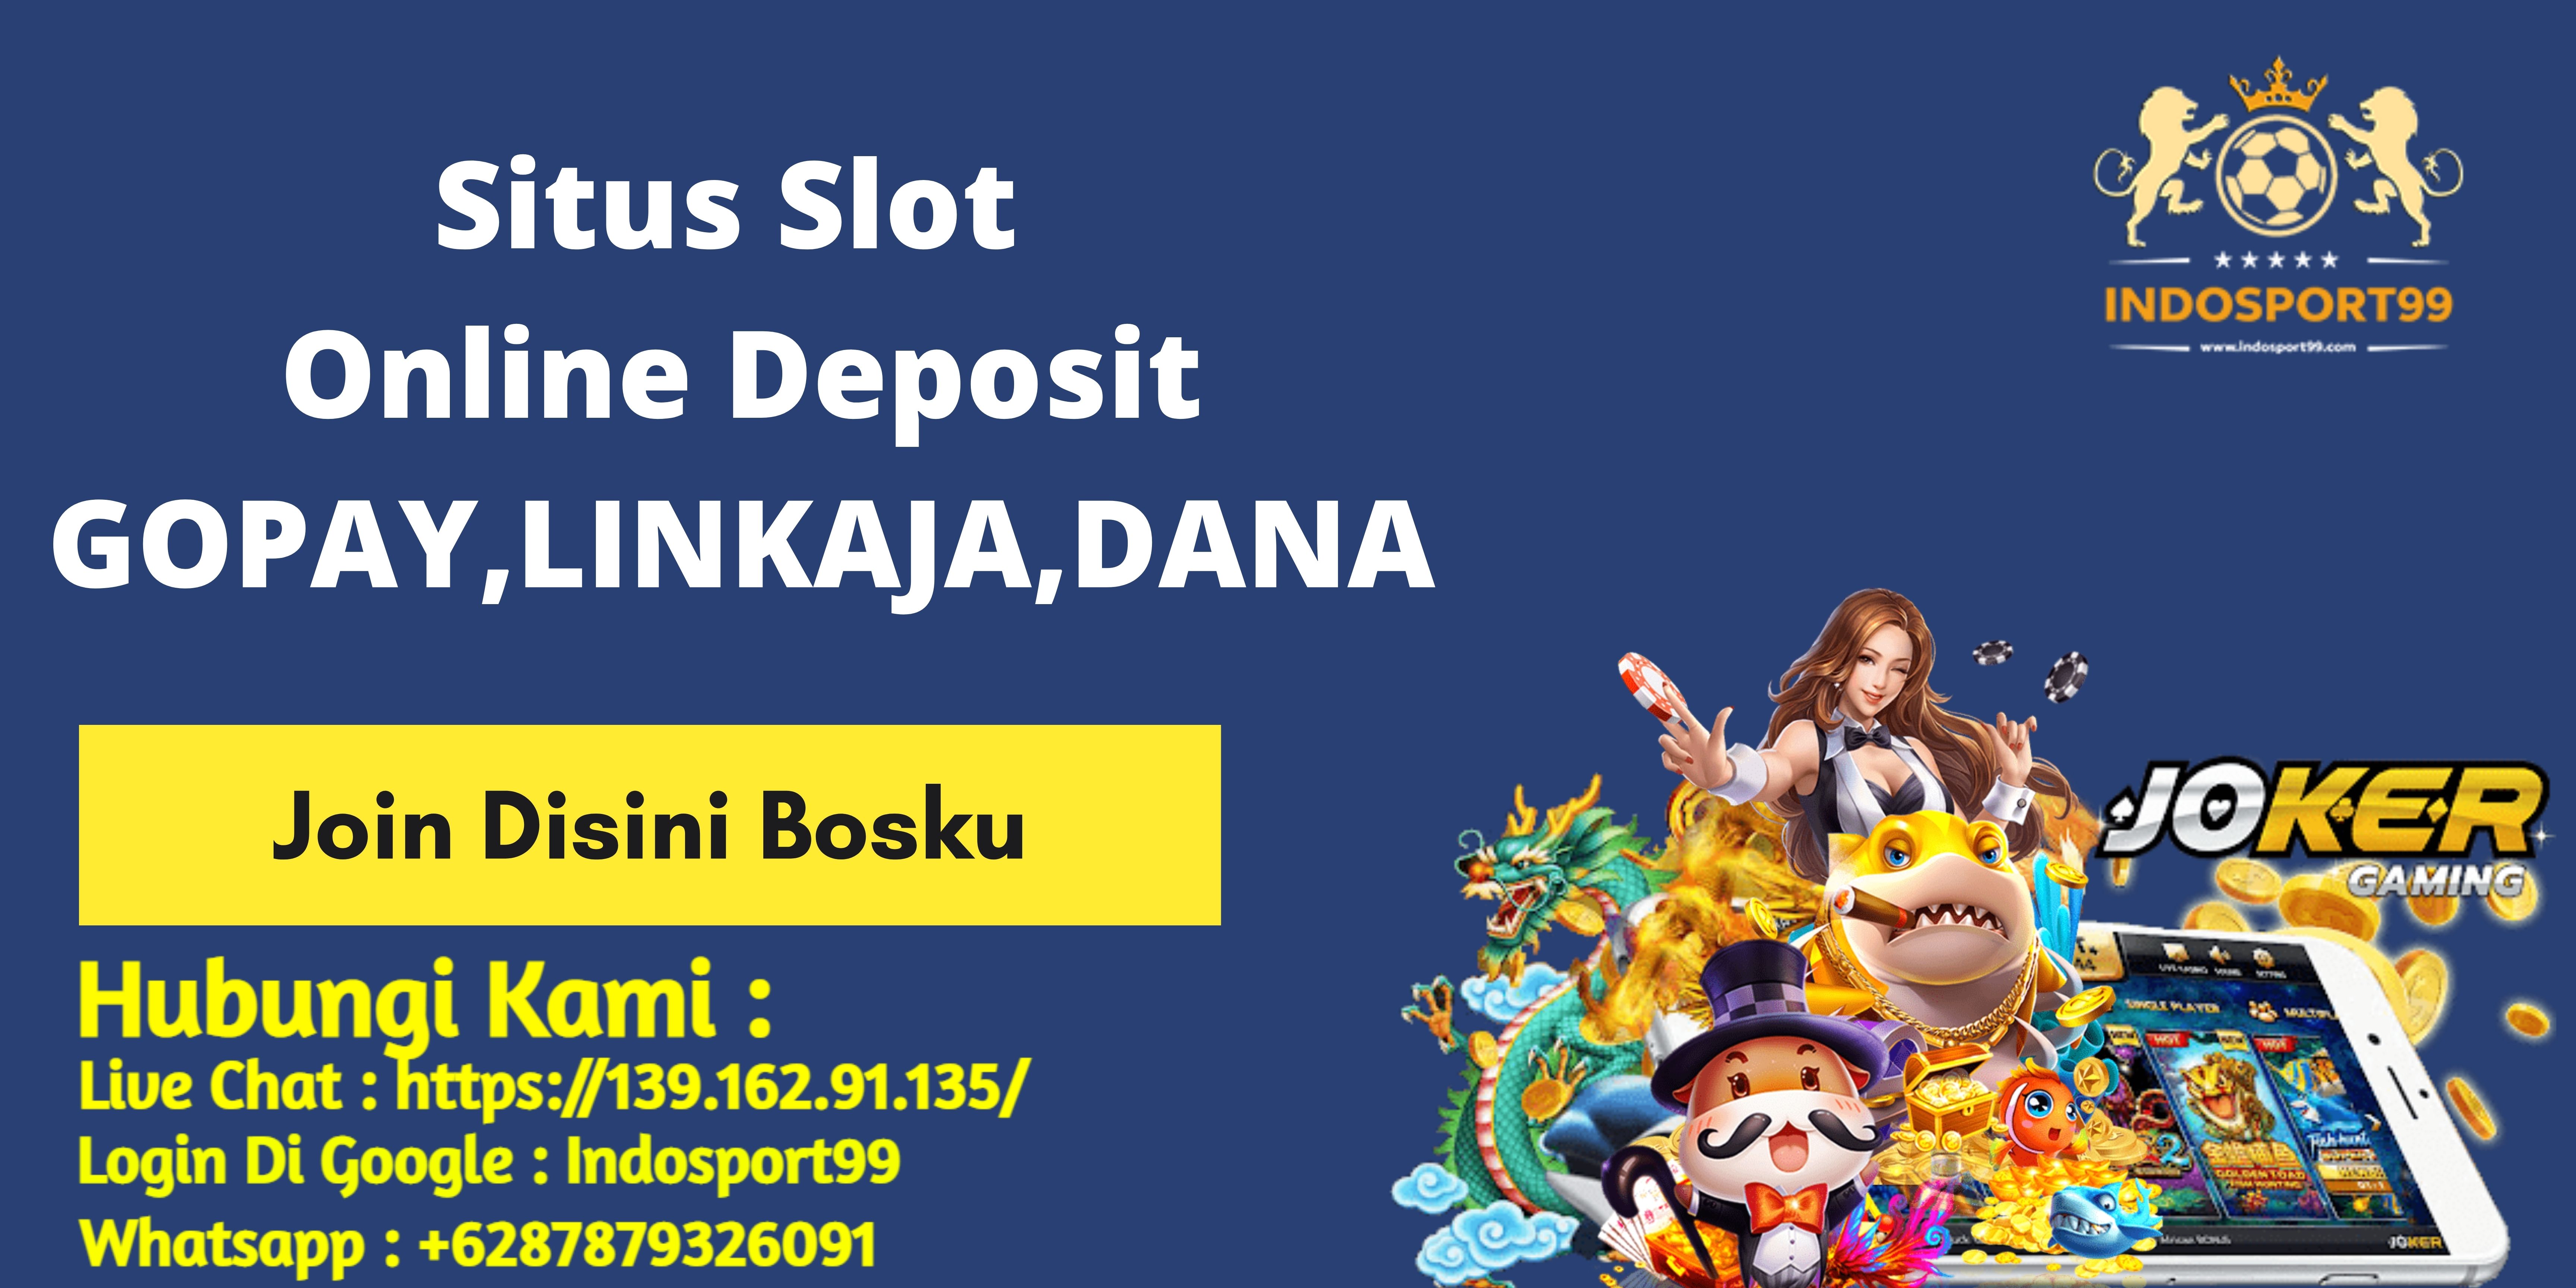 Situs Slot Online Deposit GOPAY,LINKAJA,DANA